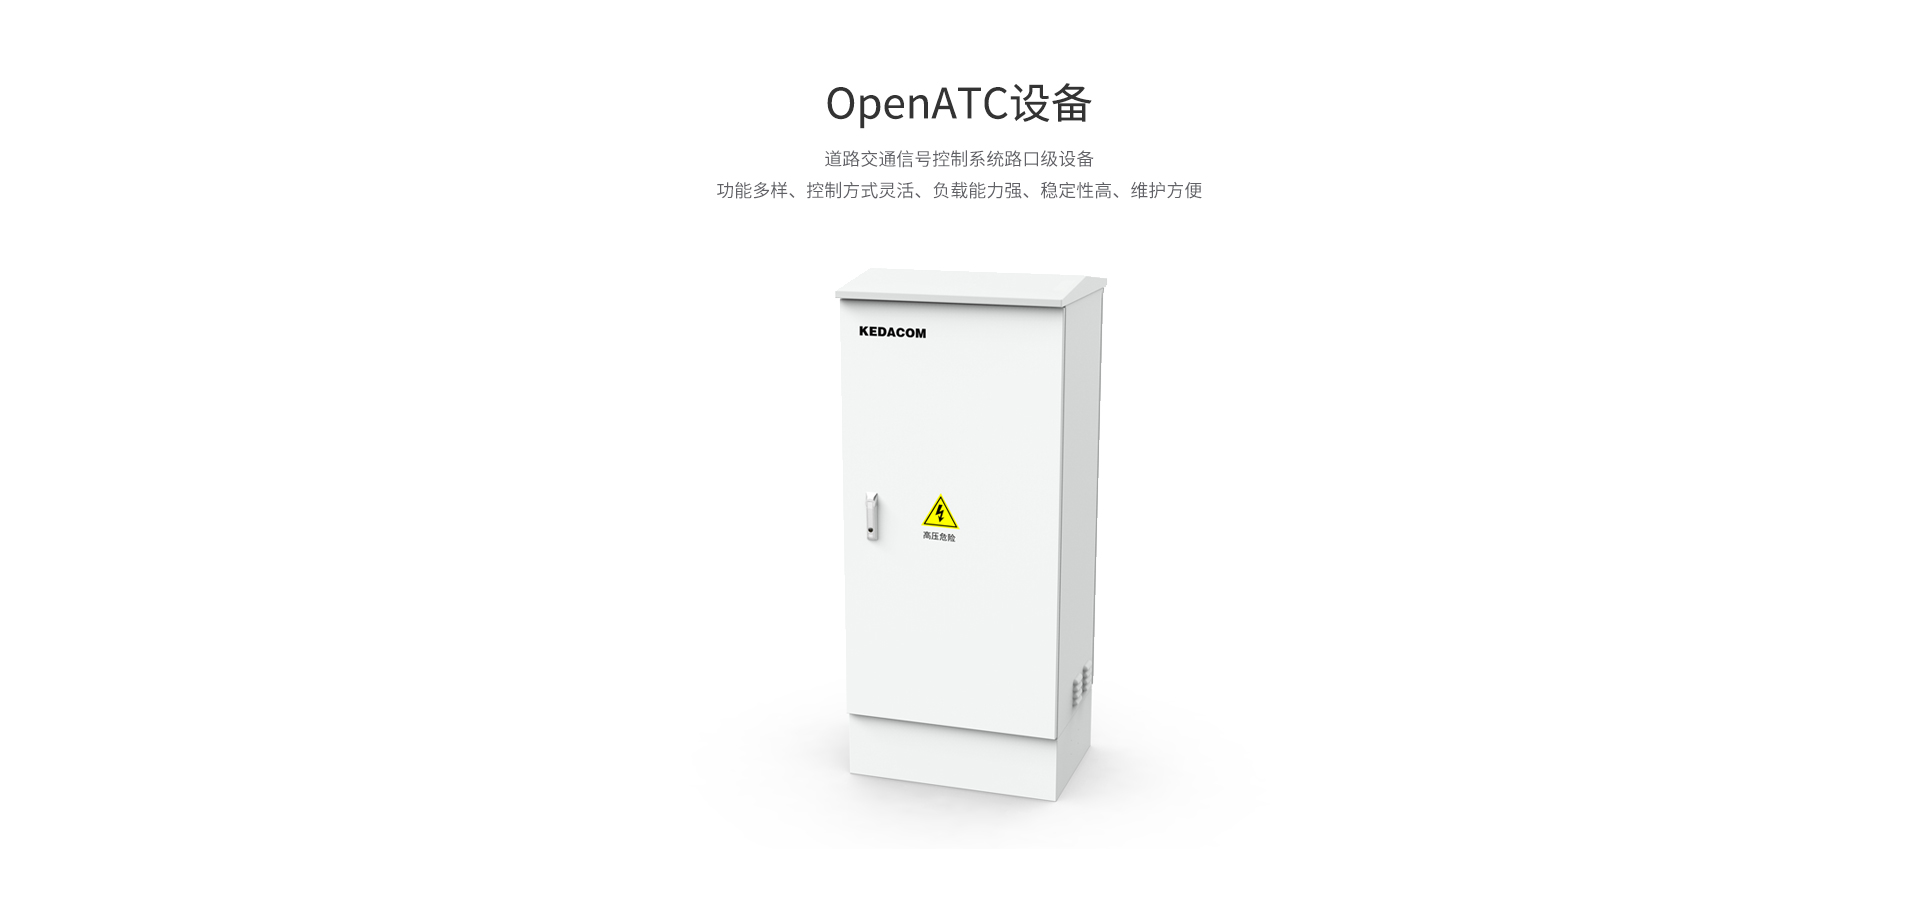 OpenATC设备